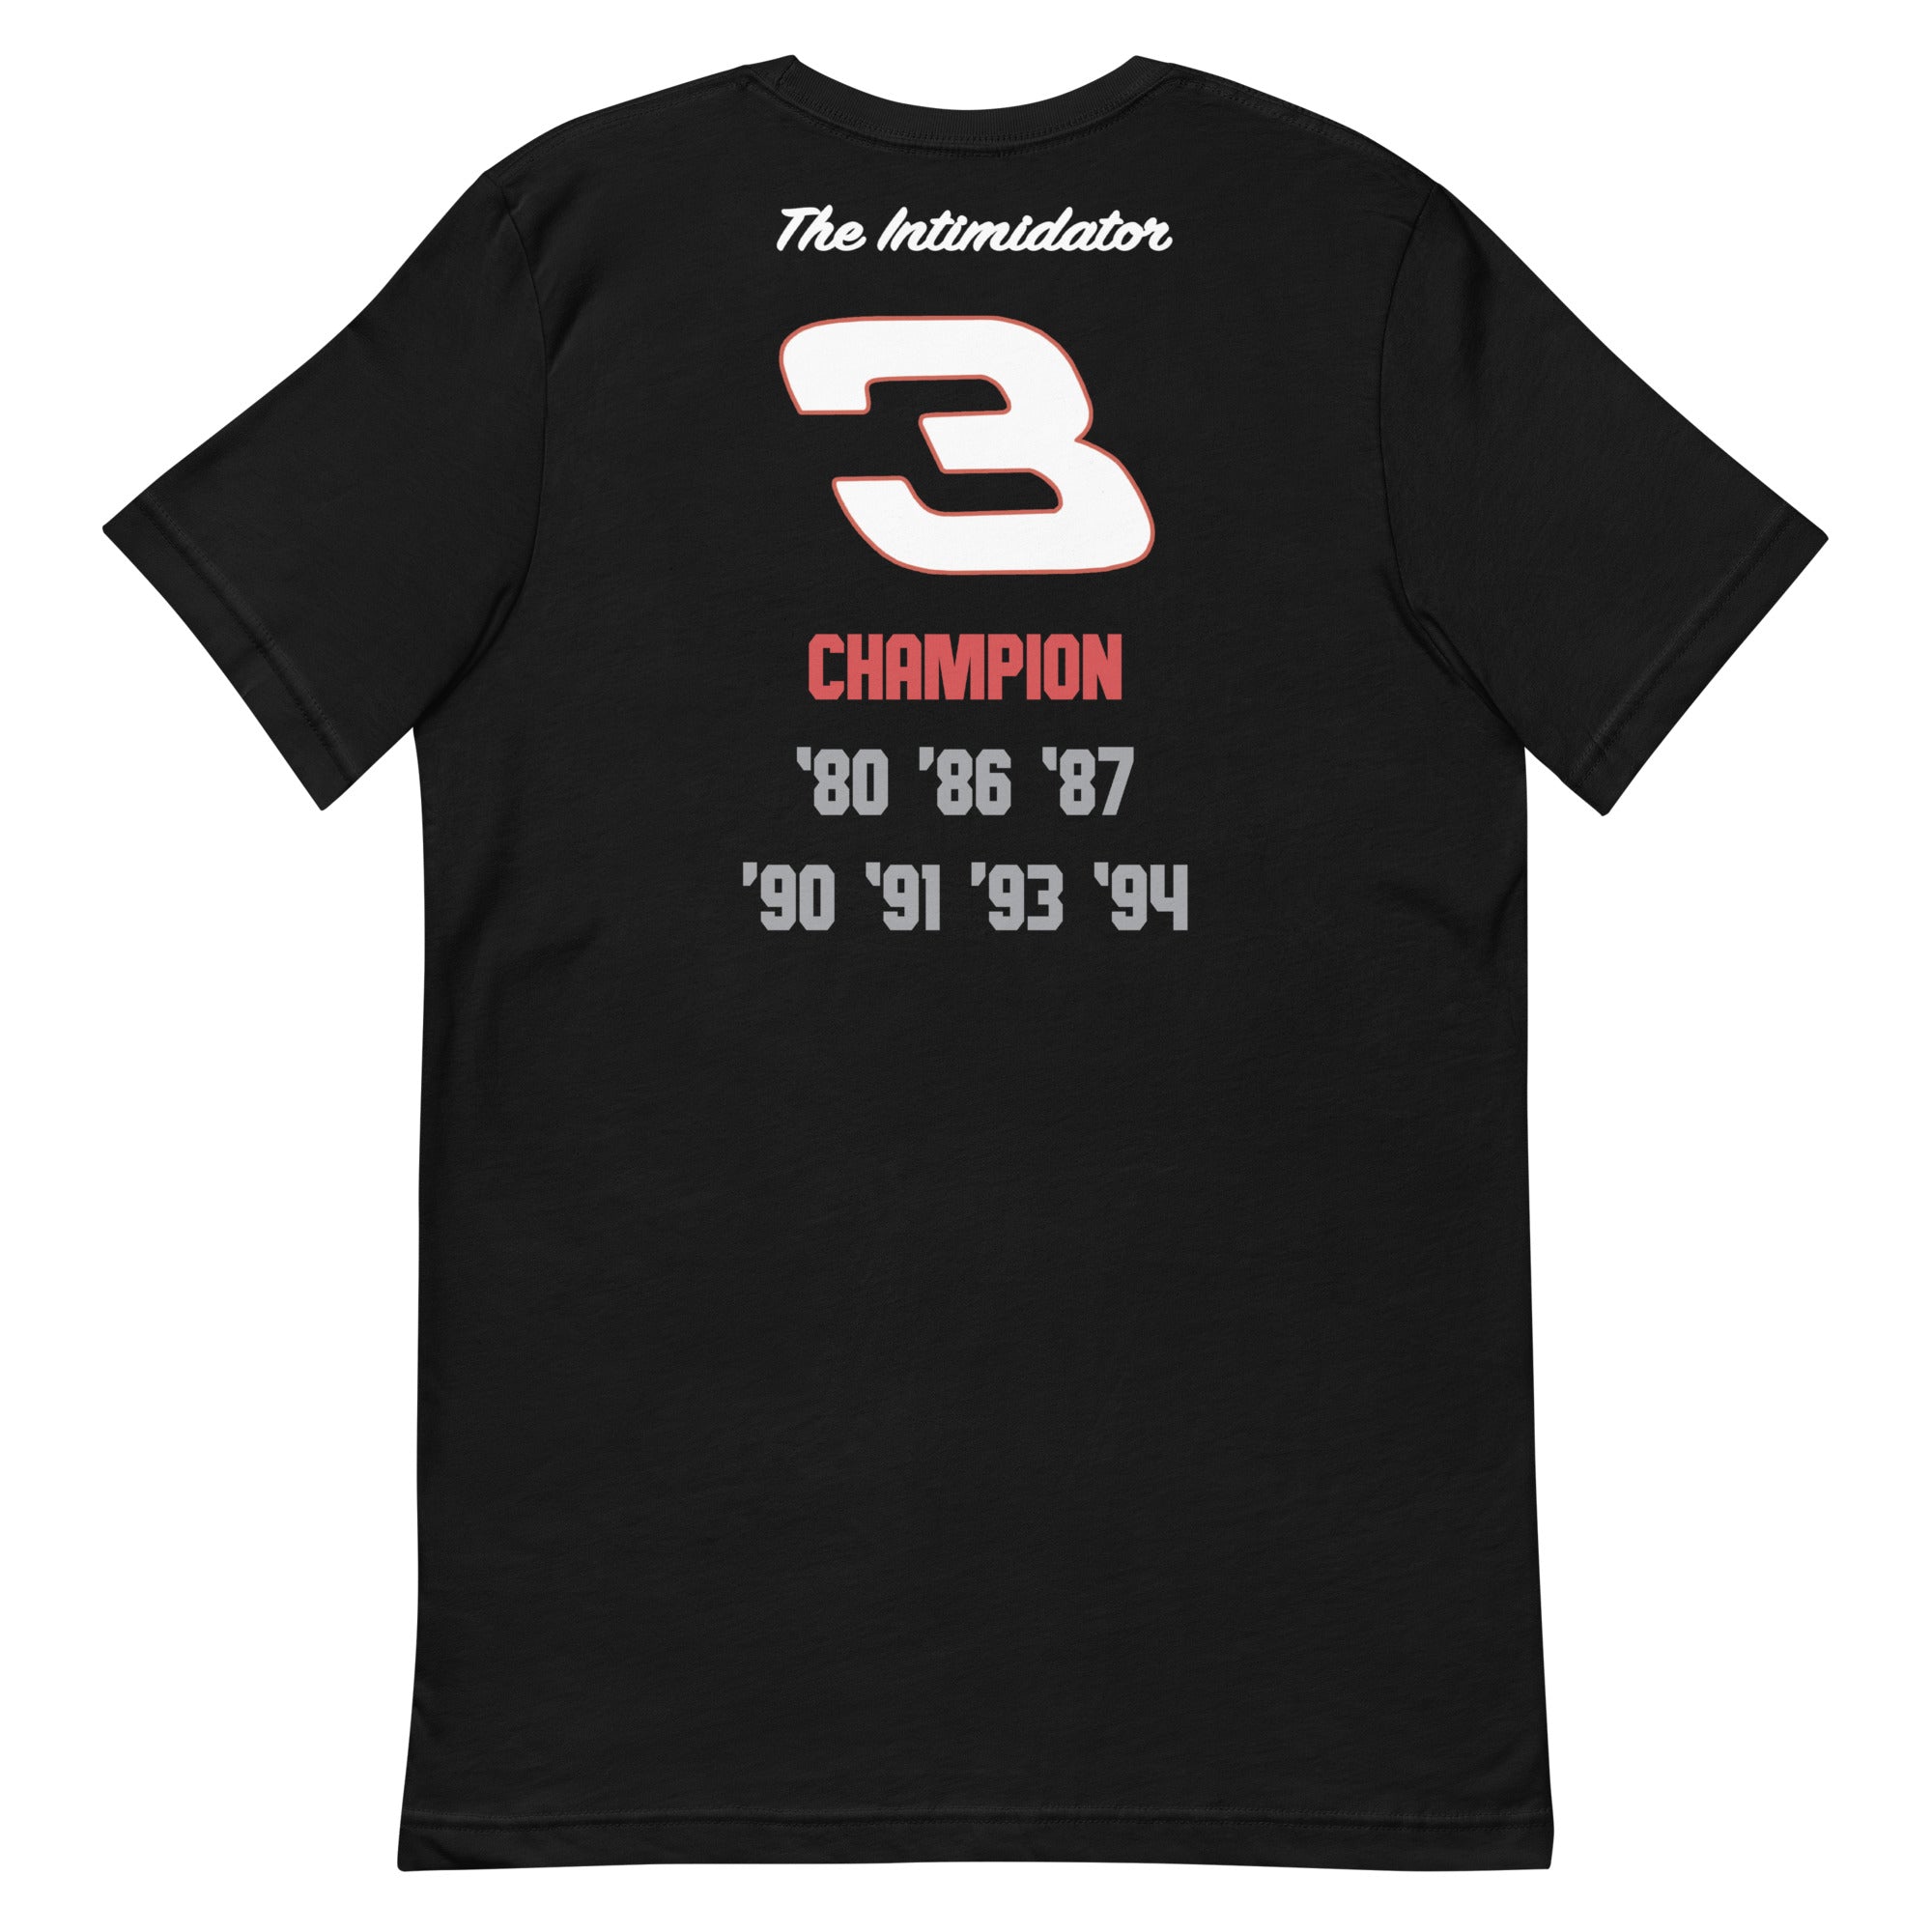 Dale Earnhardt snr 3 nascar black t shirt rear flat